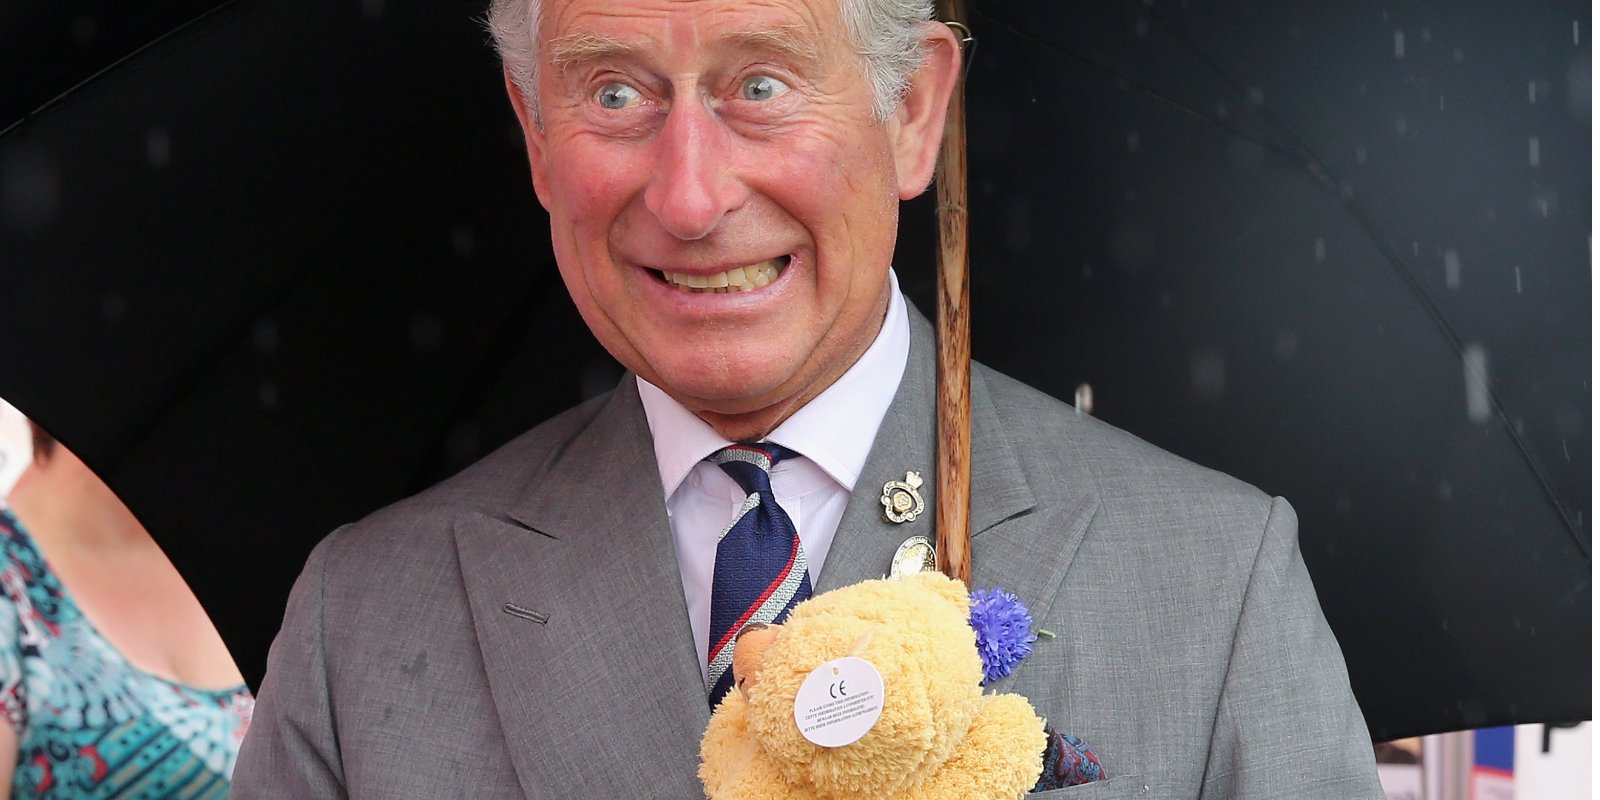 King Charles III holding a stuffed animal in 2013.